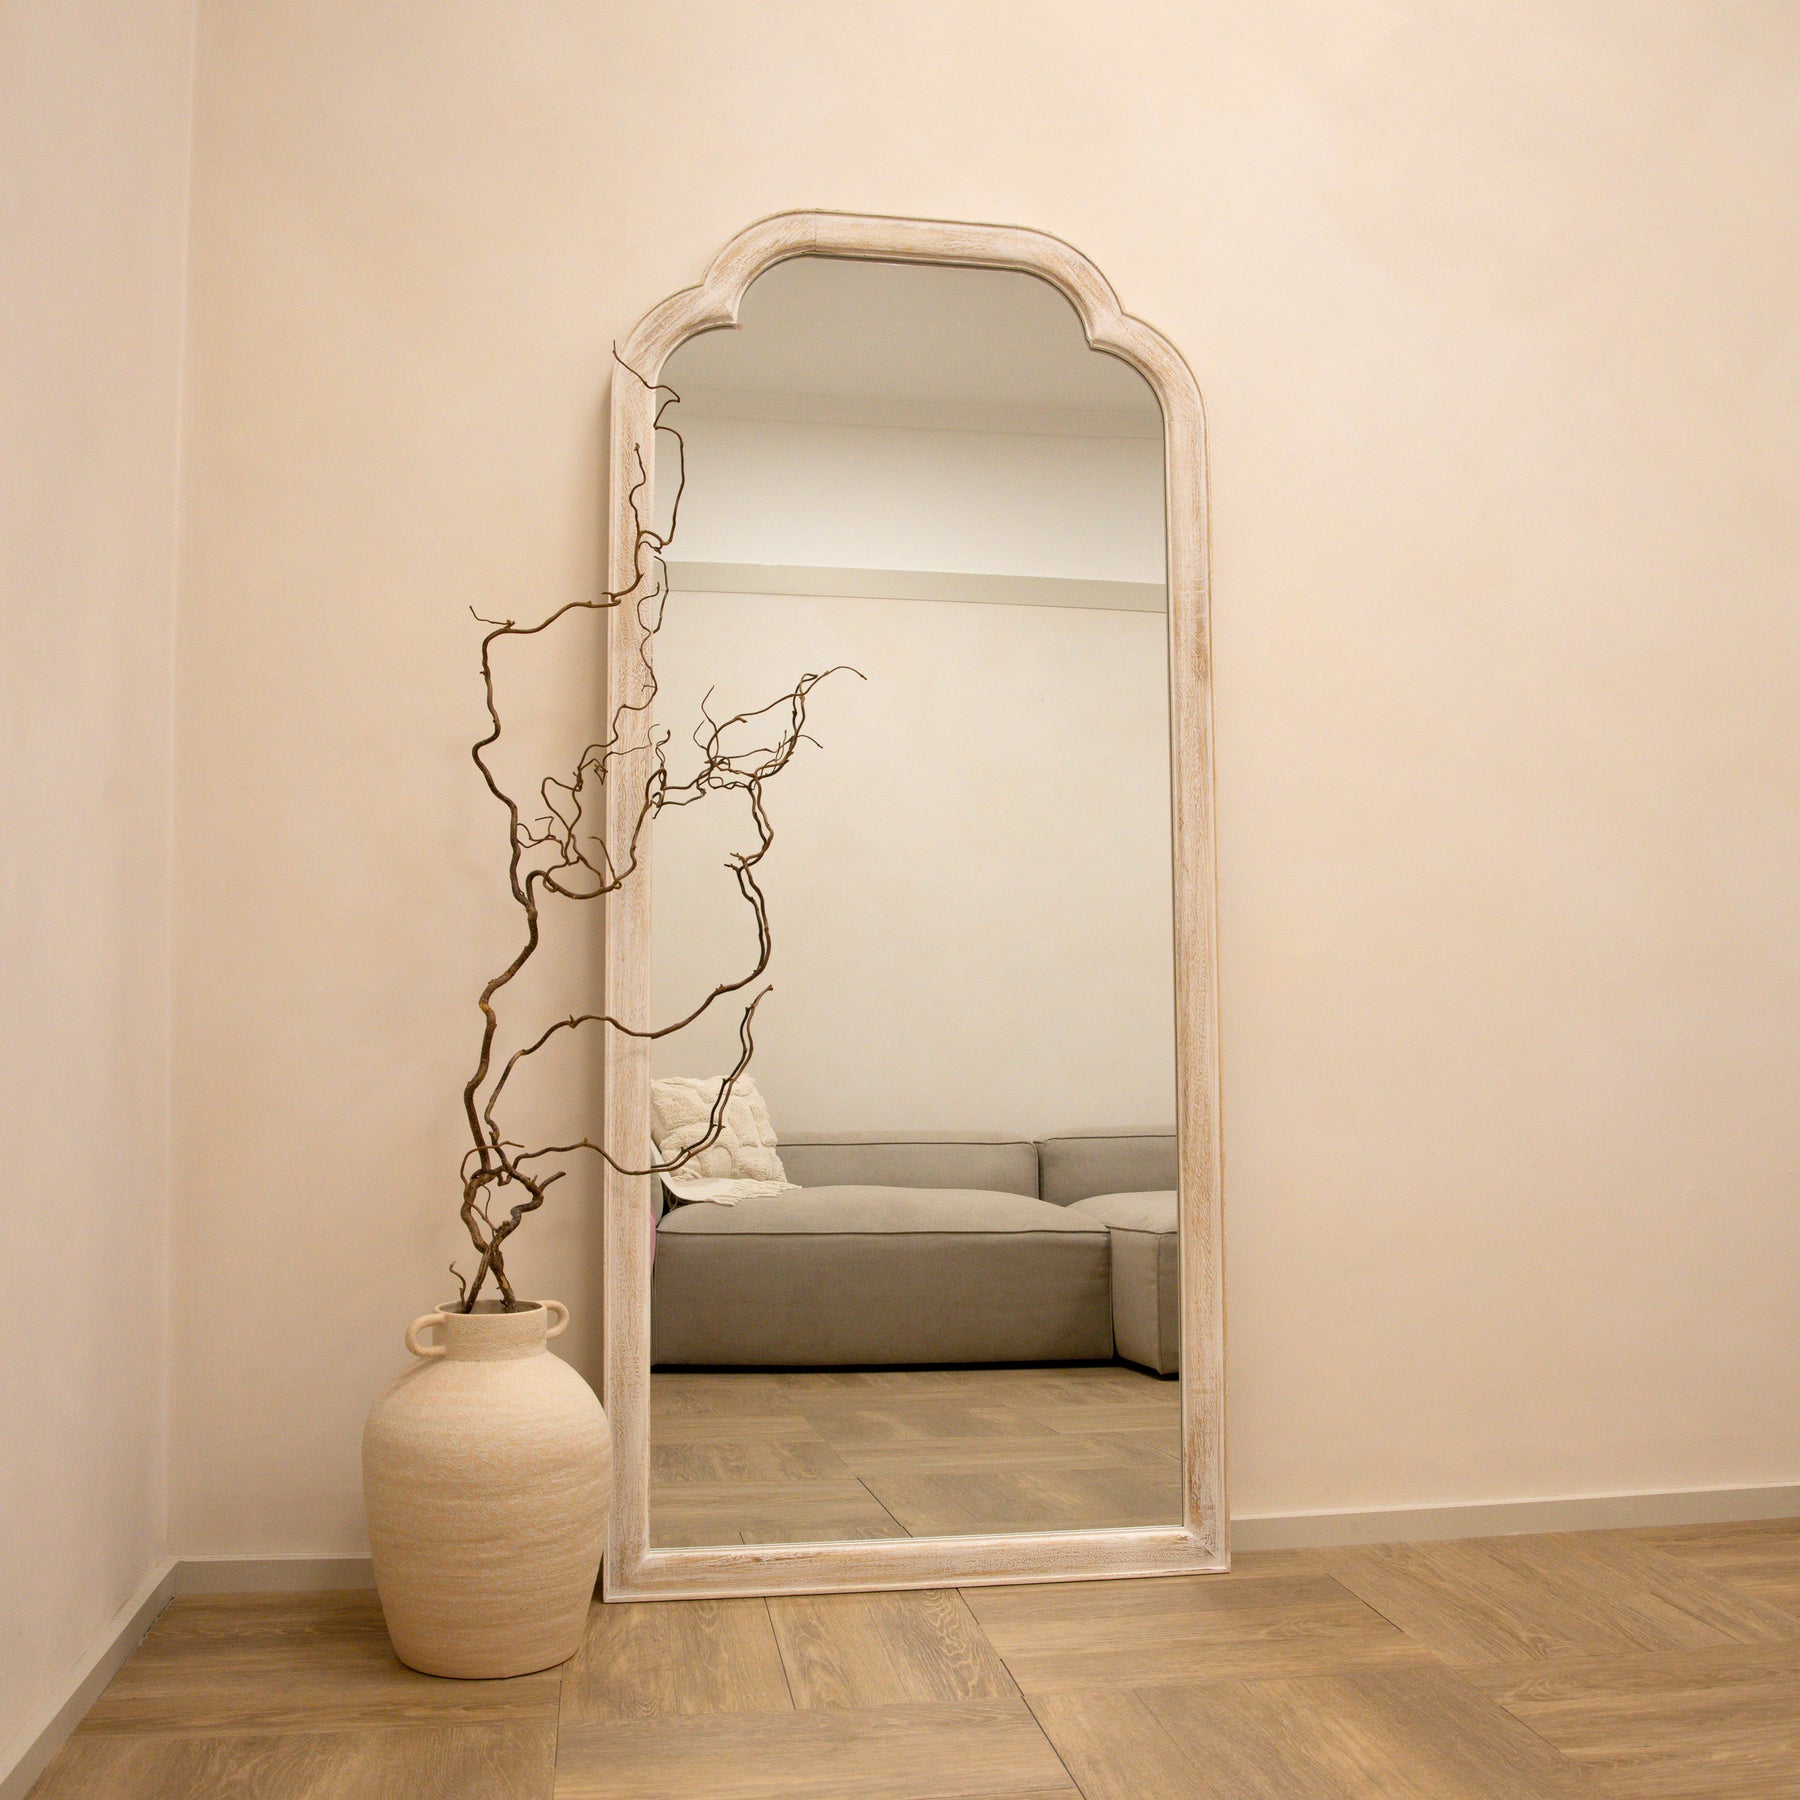 Elena - Full Length Washed Wood Arched Mirror 170cm x 75cm